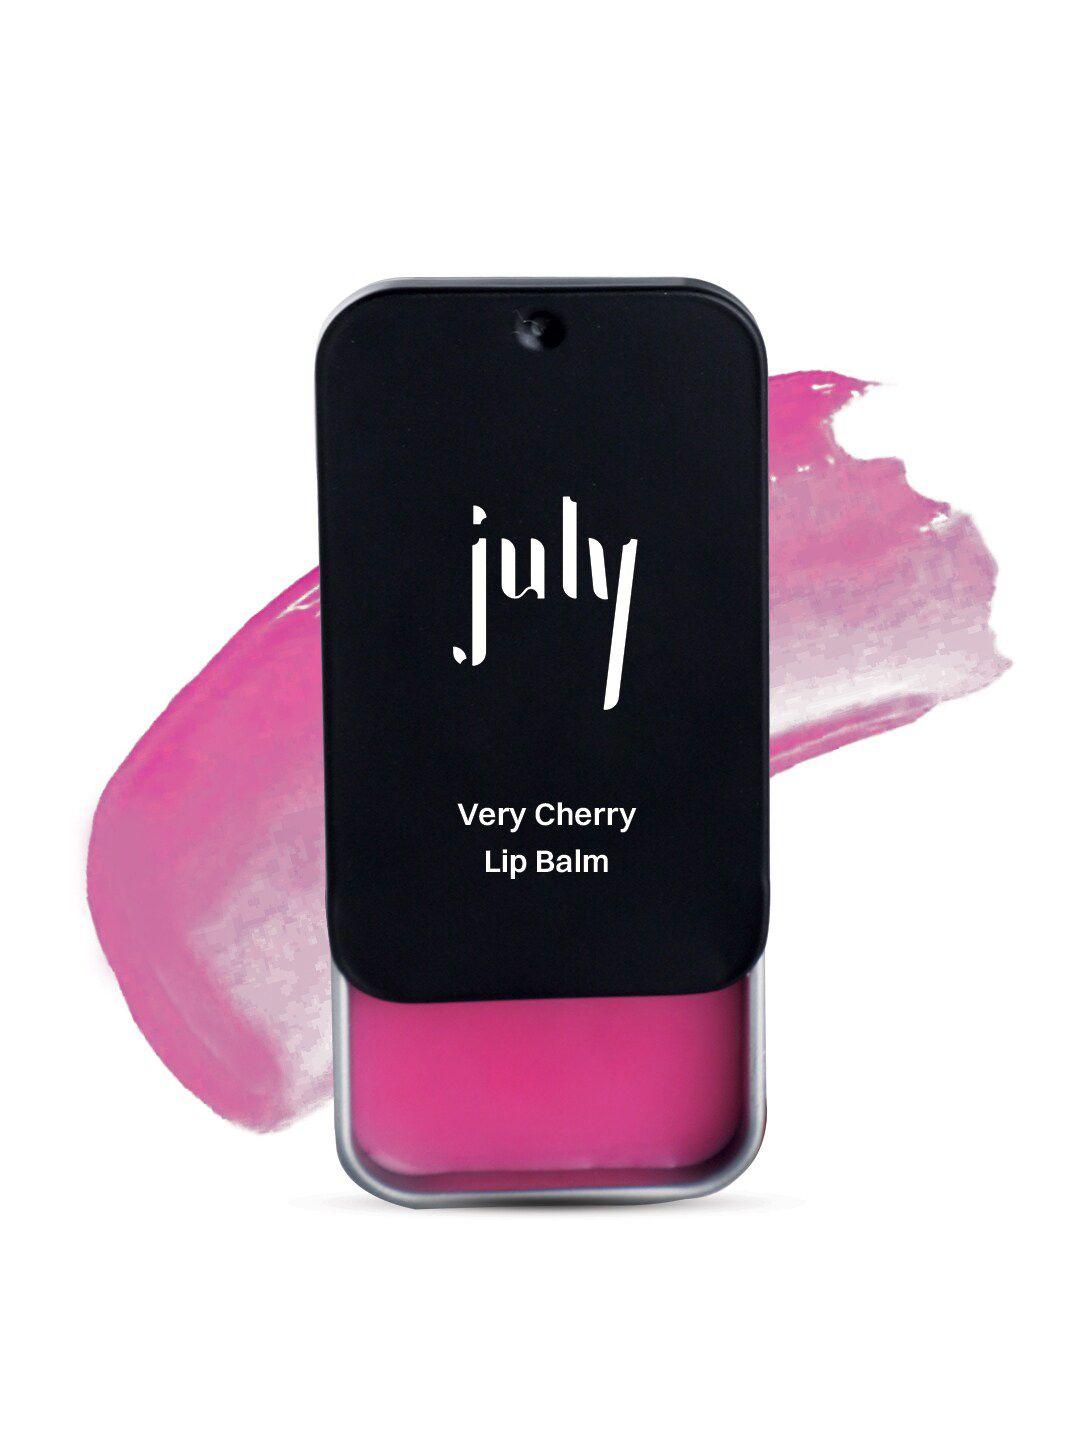 july 24hr moisturizing lip balm - very cherry 10g